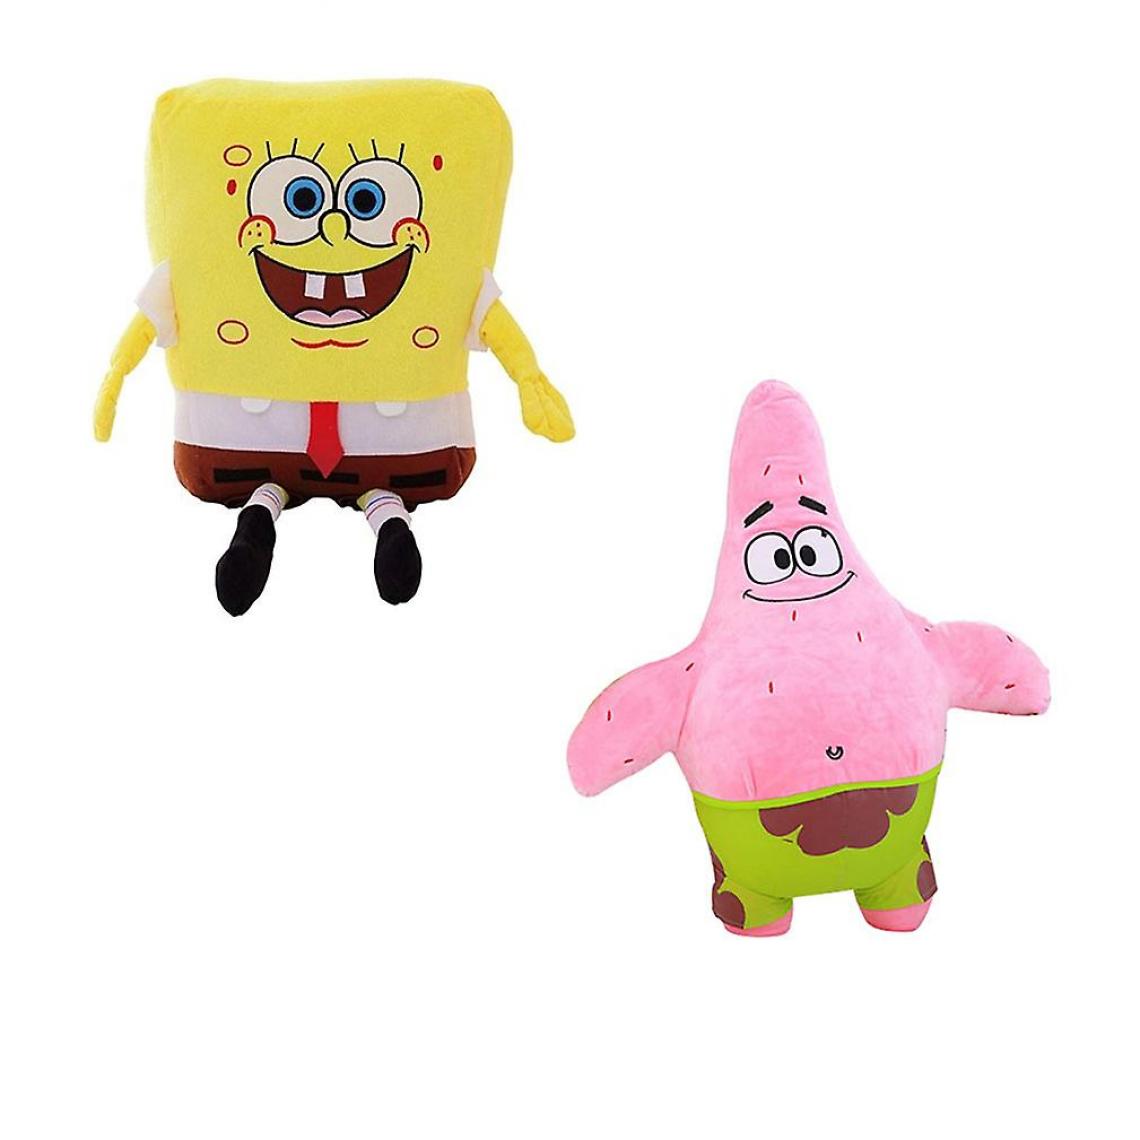 Universal - 2pcs/lot 20cm Spongebob Patrick Star Stuffed Plush Doll Toy() - Animaux